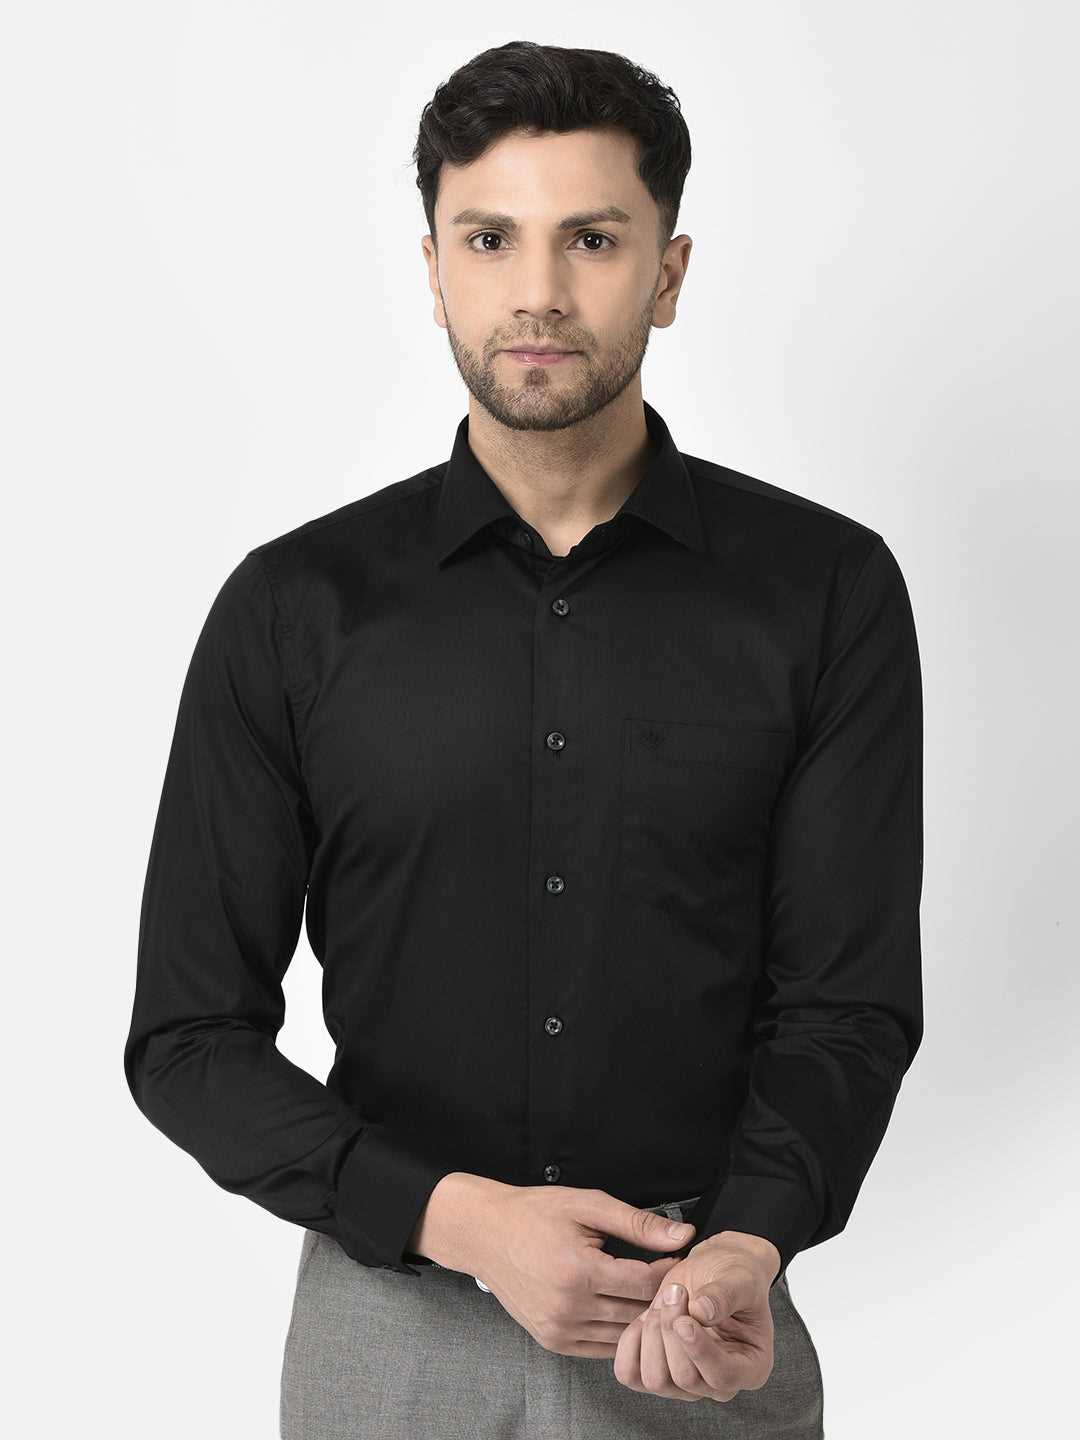 Cobb Black Solid Slim Fit Formal Shirt Black